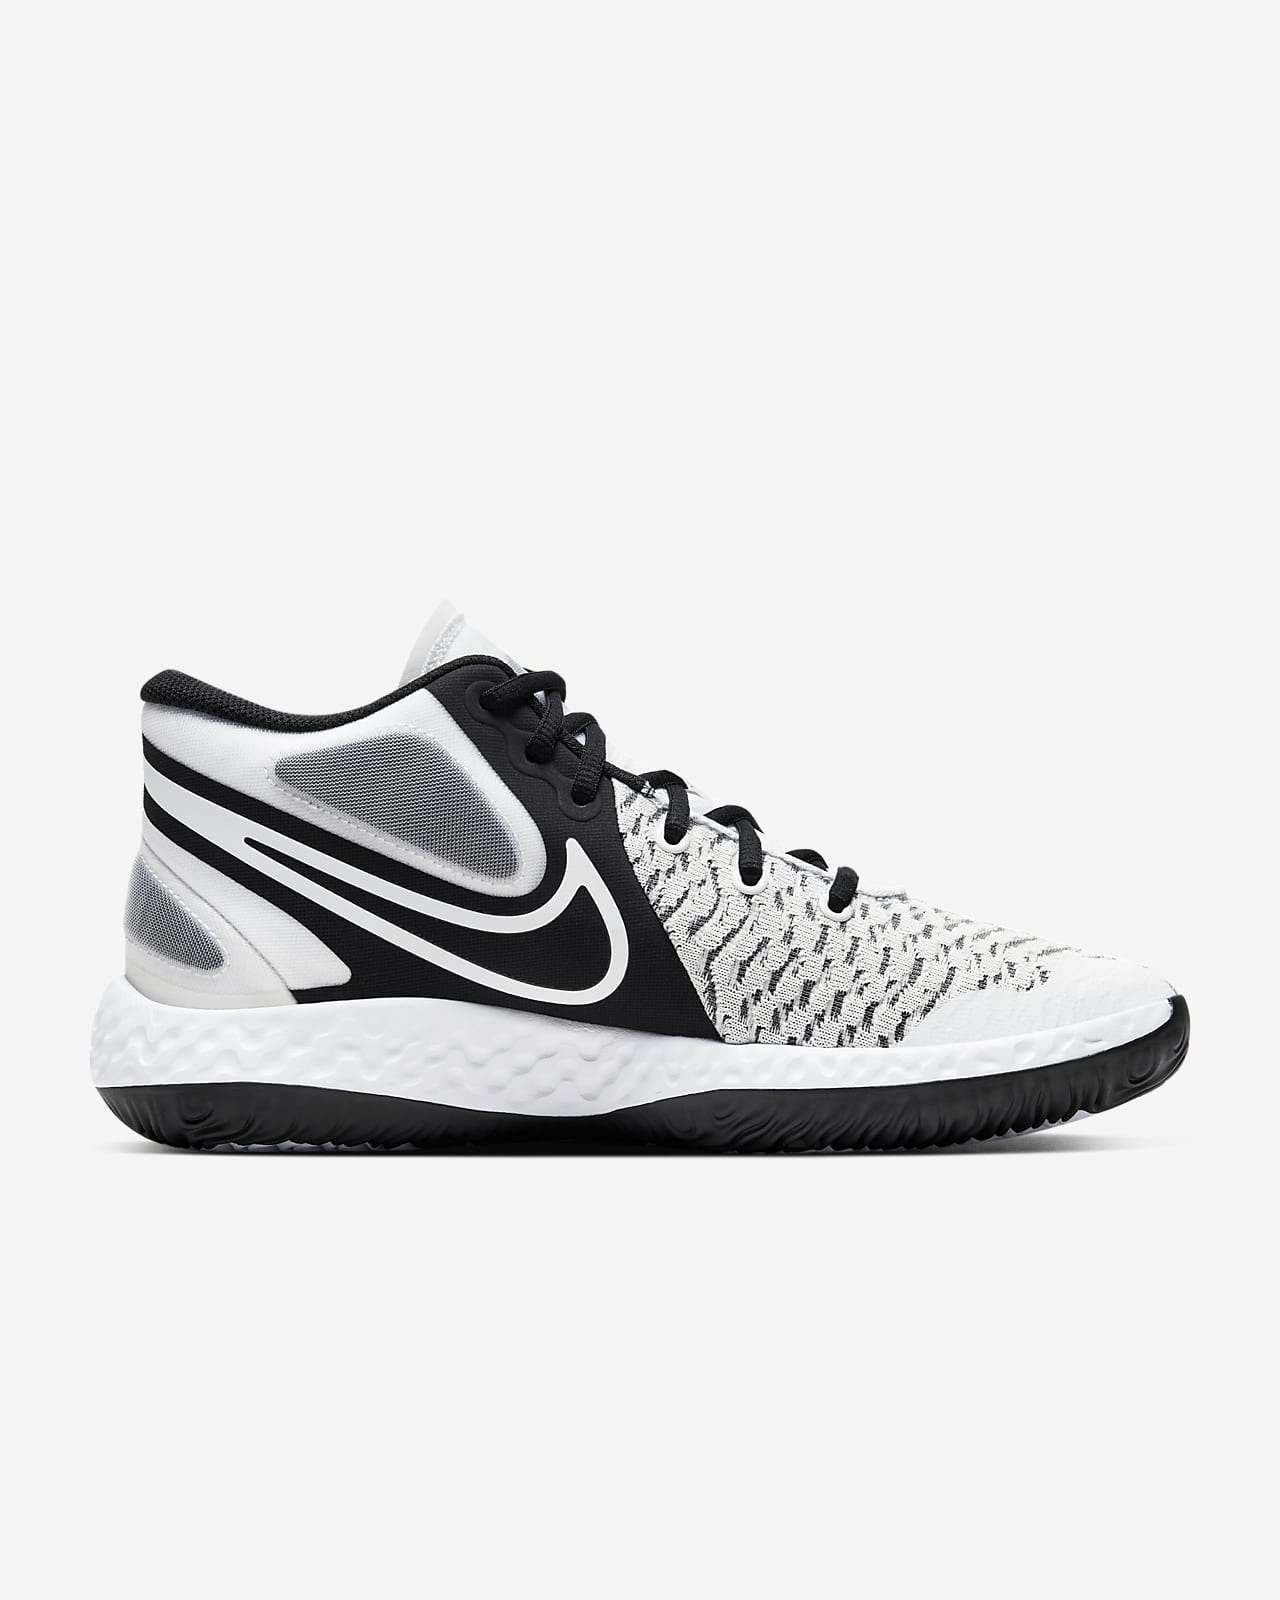 KD Trey 5 VIII EP Basketball Shoe. Nike JP